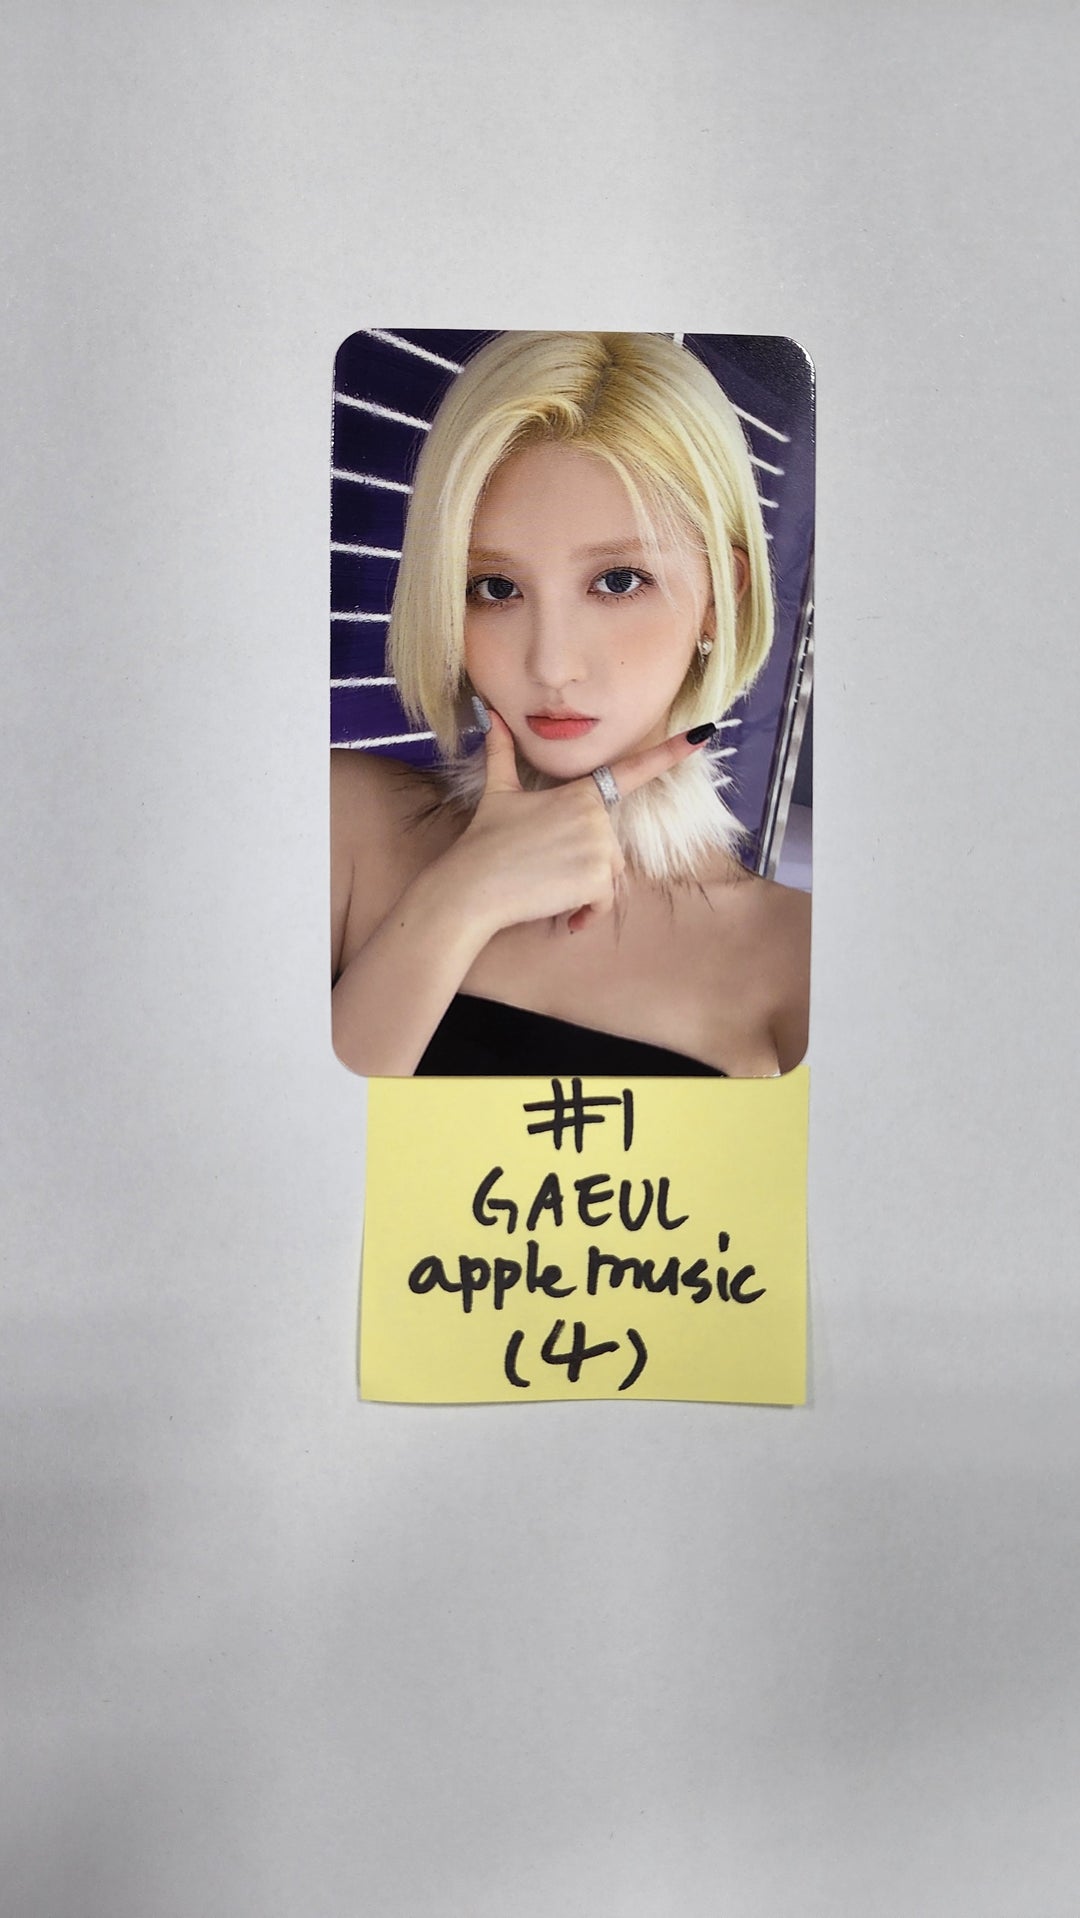 IVE「After Like」 - Apple Music ファンサインイベントフォトカード